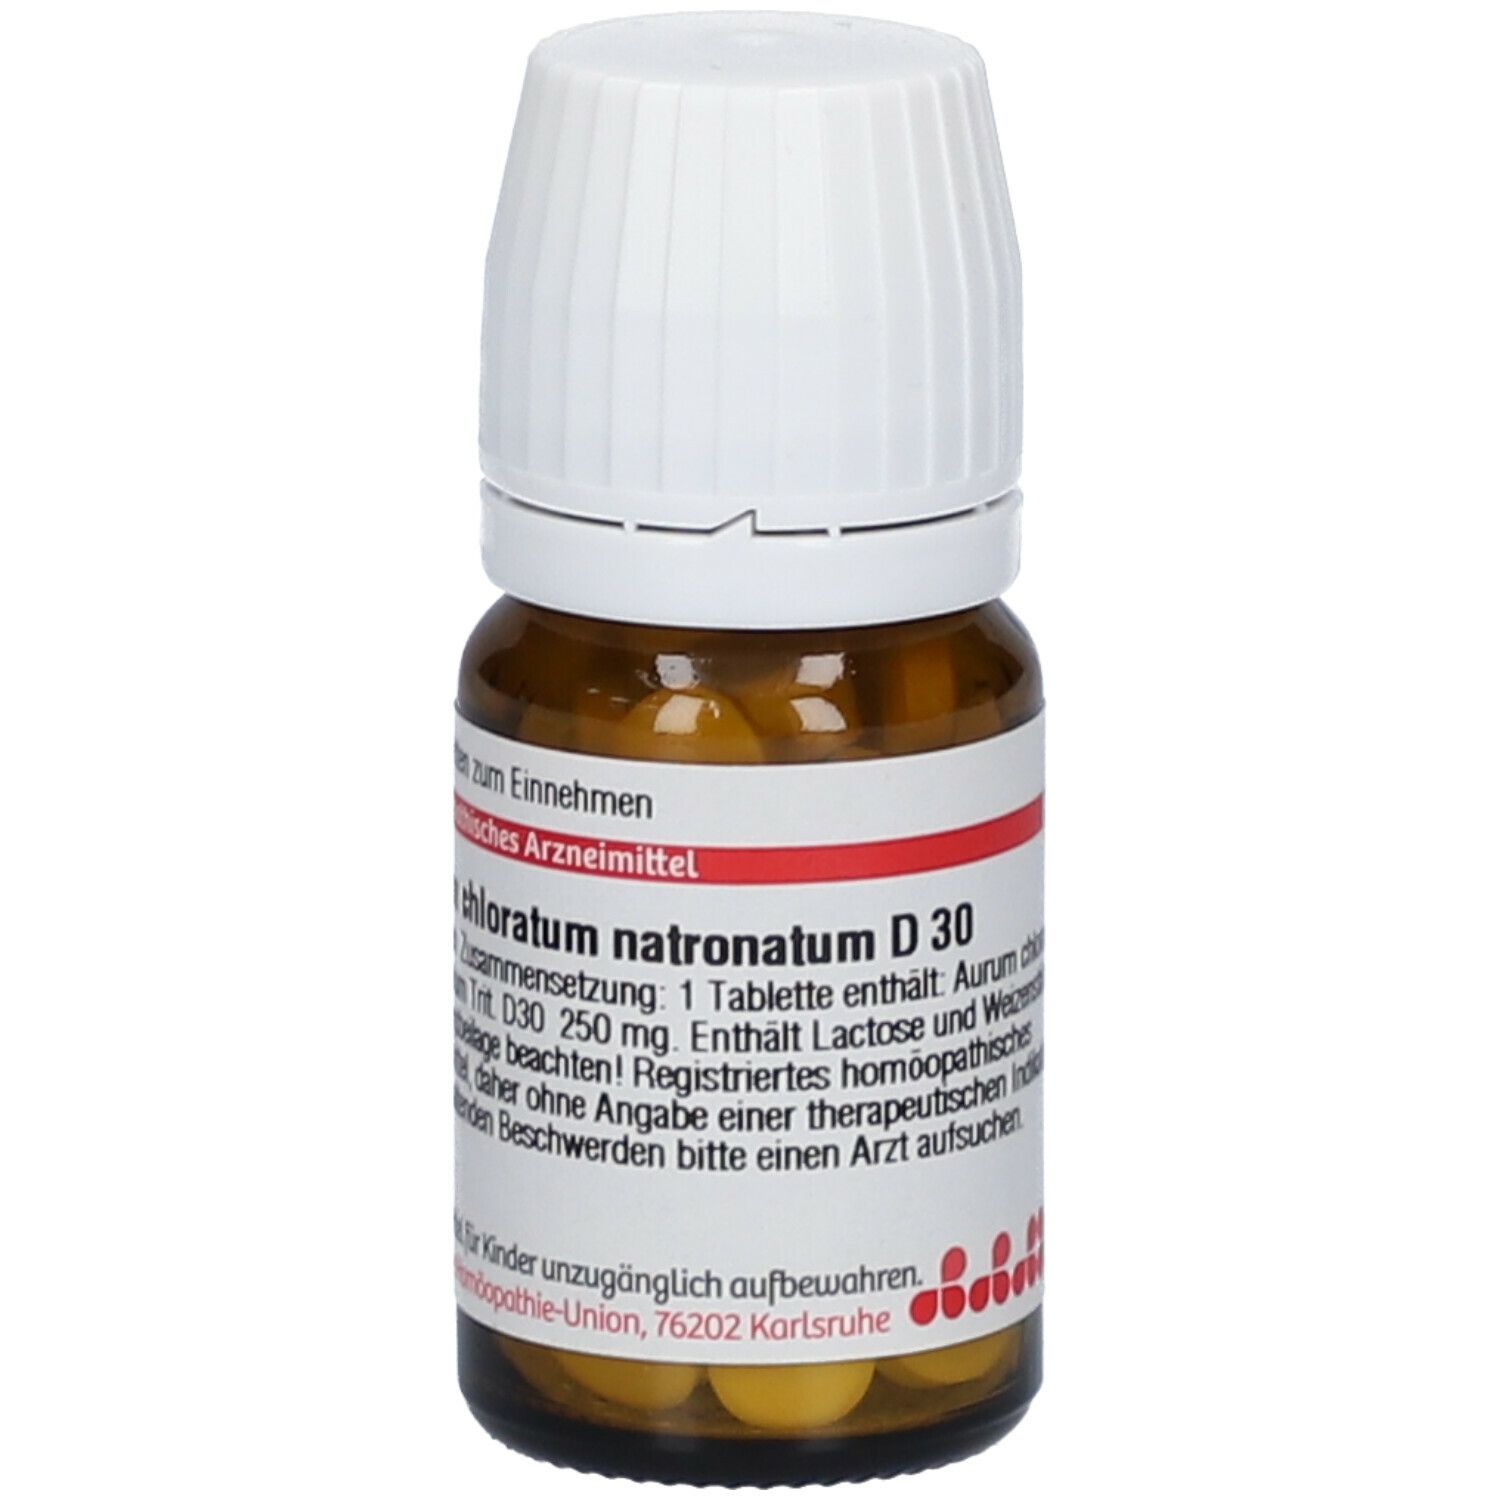 DHU Aurum Chloratum Natronatum D30